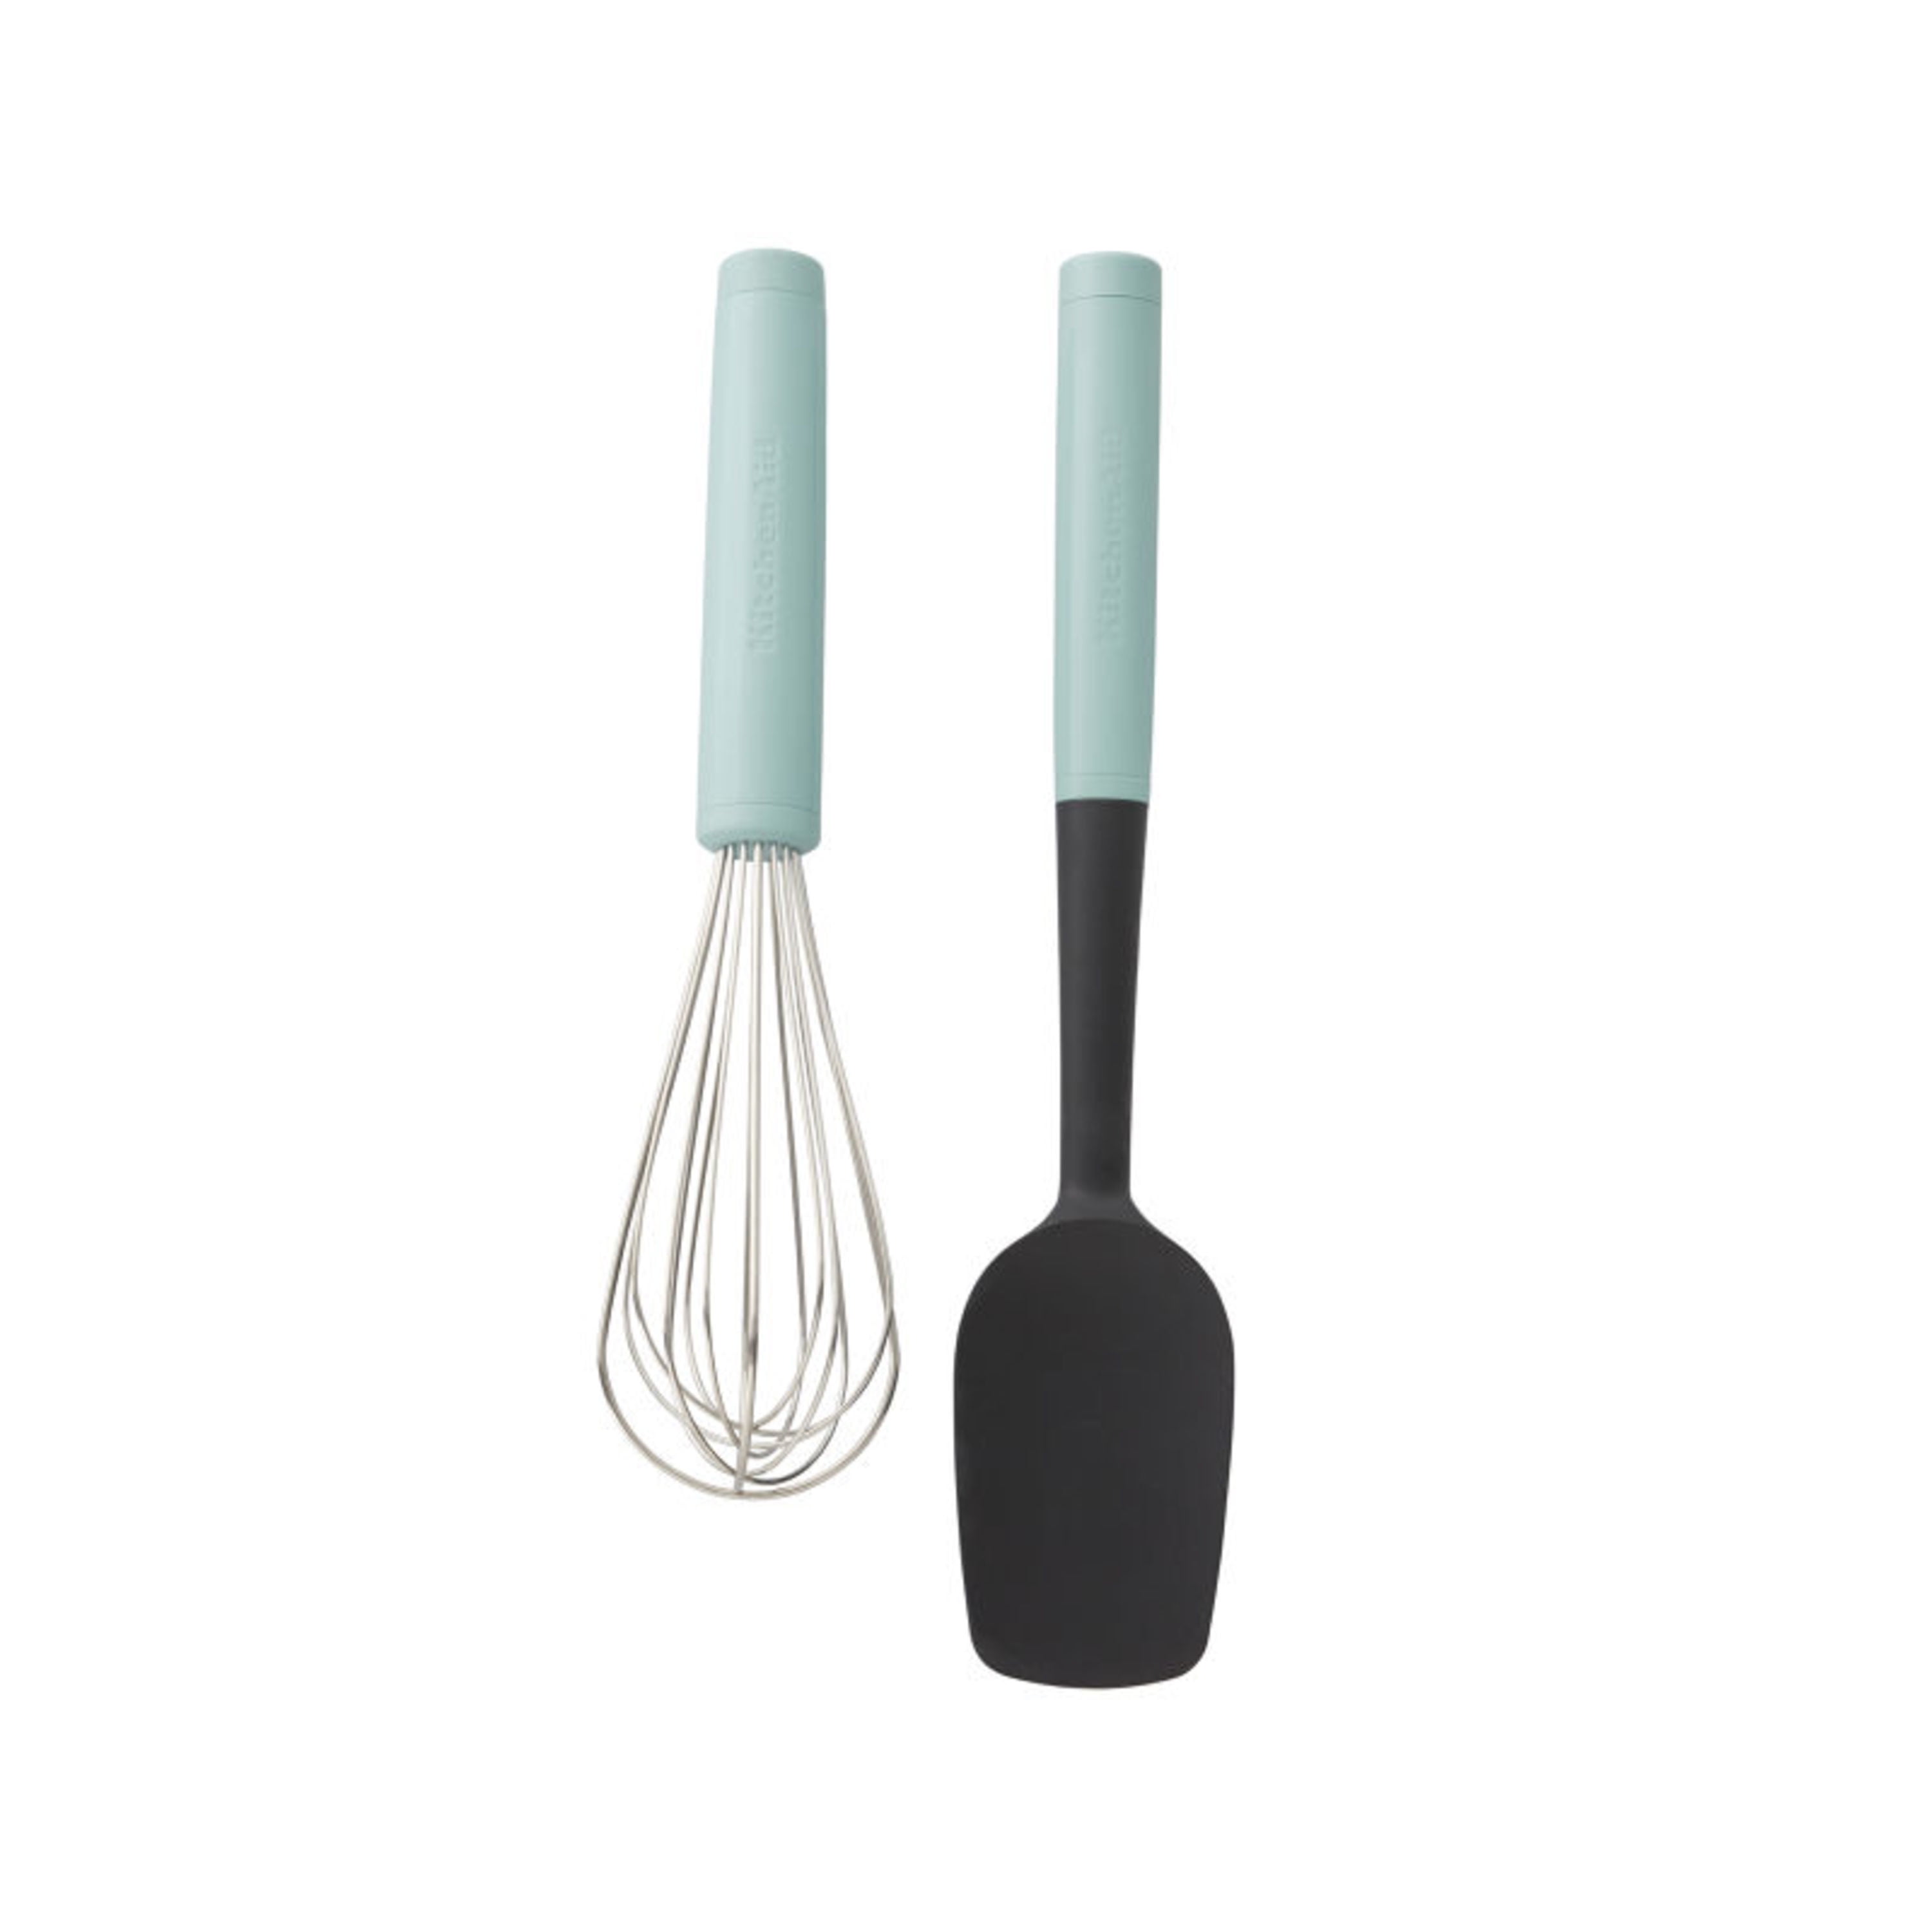 KitchenAid Aqua Sky Utility Whisk - Everything Turquoise  Kitchen aid,  Blue kitchen utensils, Cool kitchen gadgets